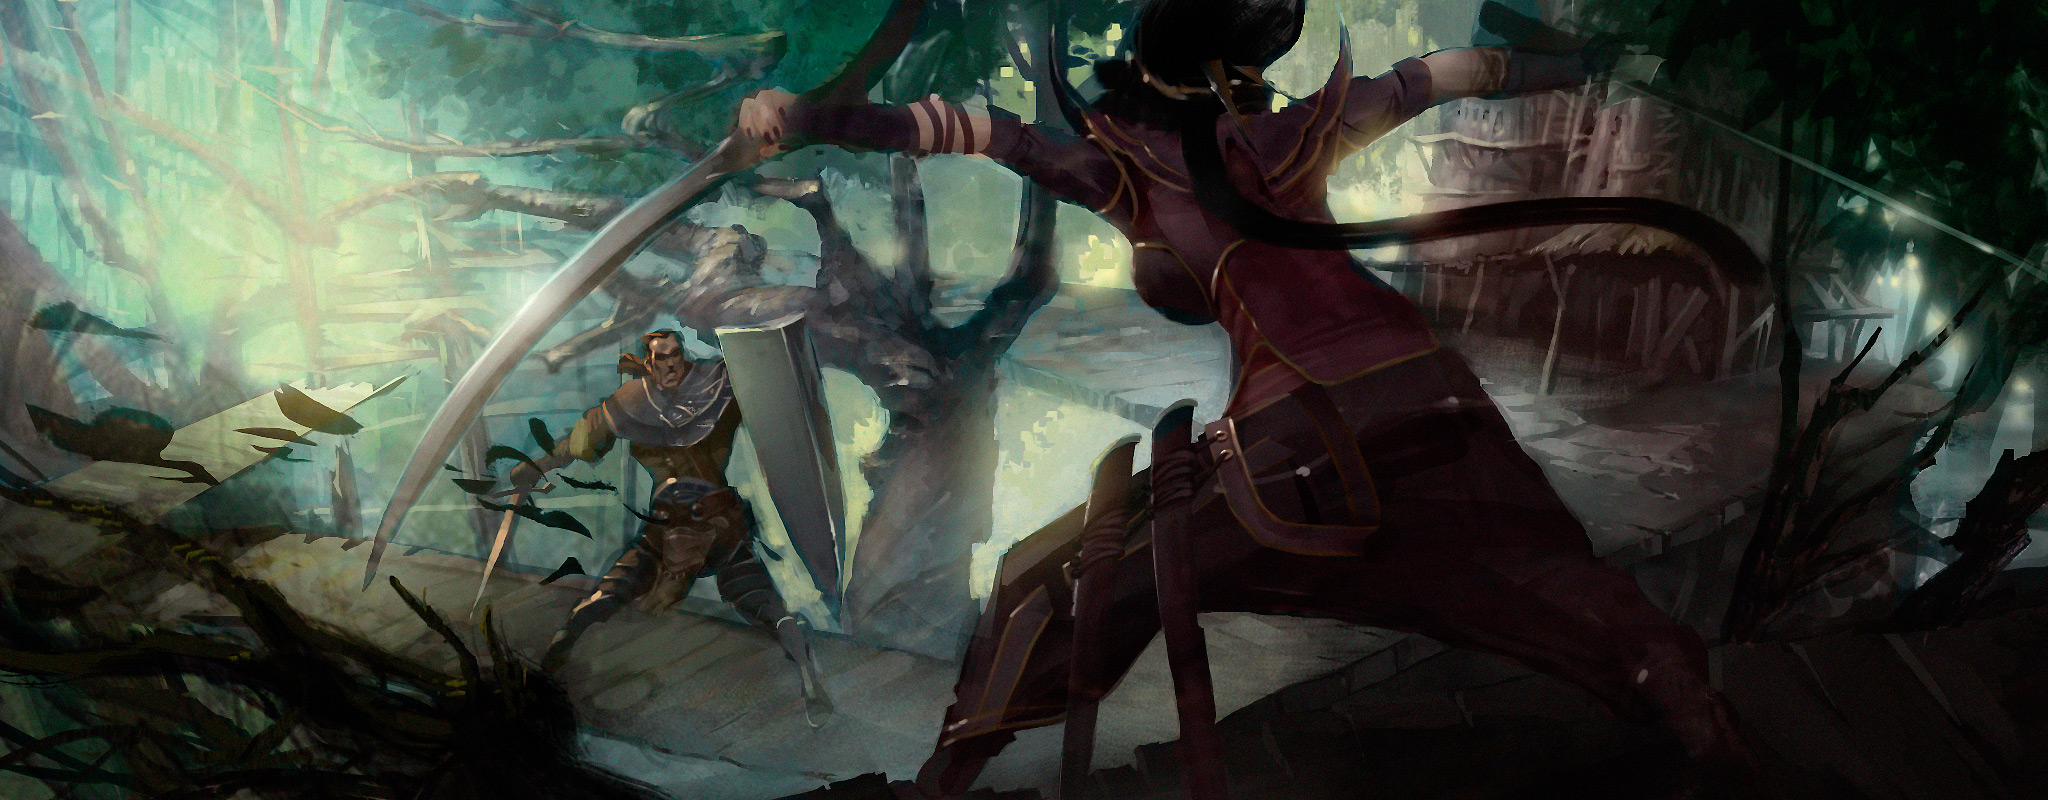 Skara: The Blade Remains #14